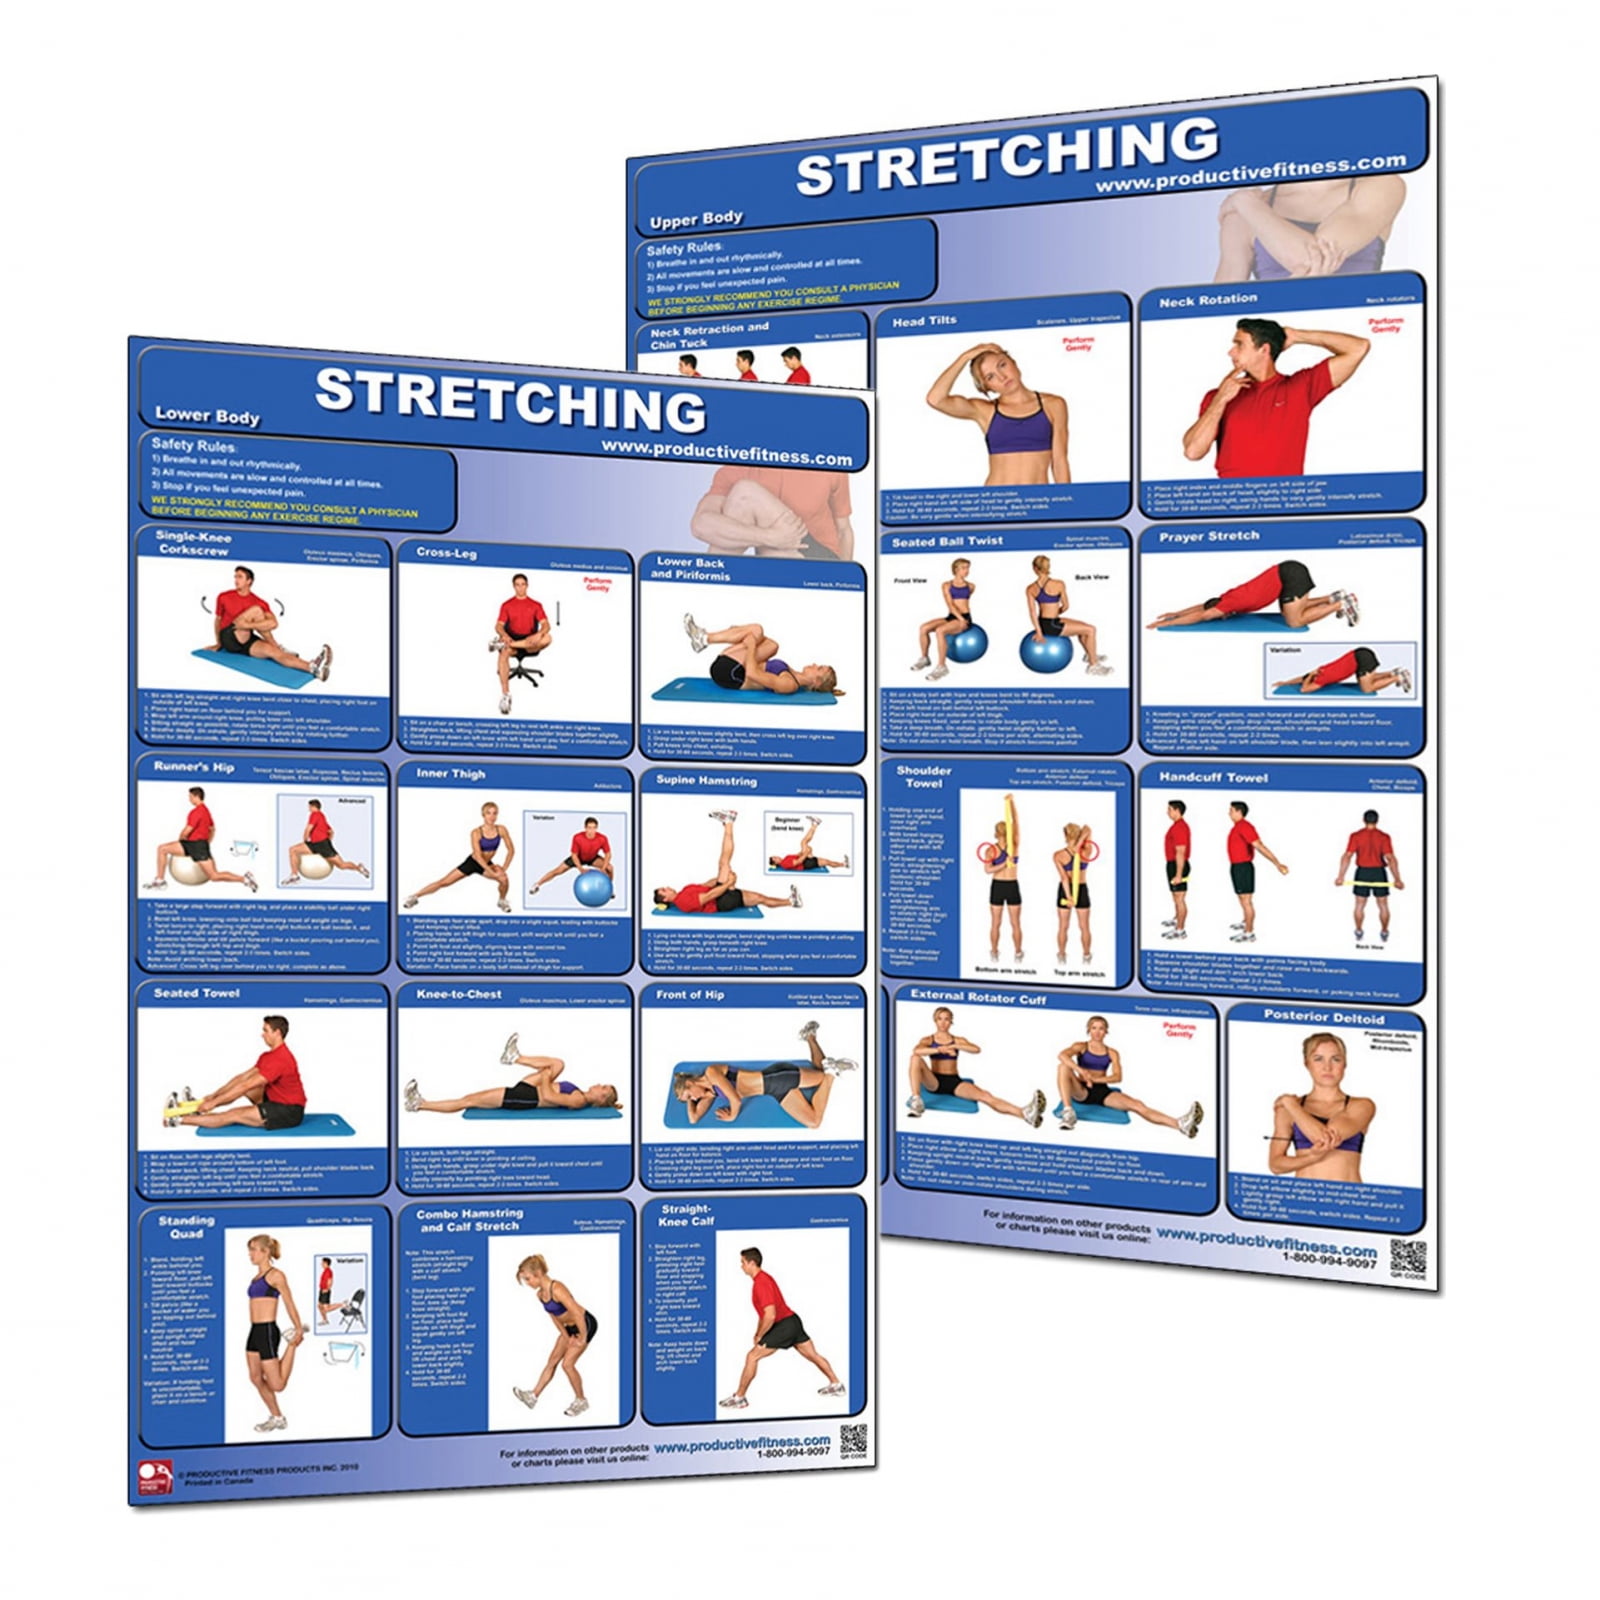  Upper Body Stretching